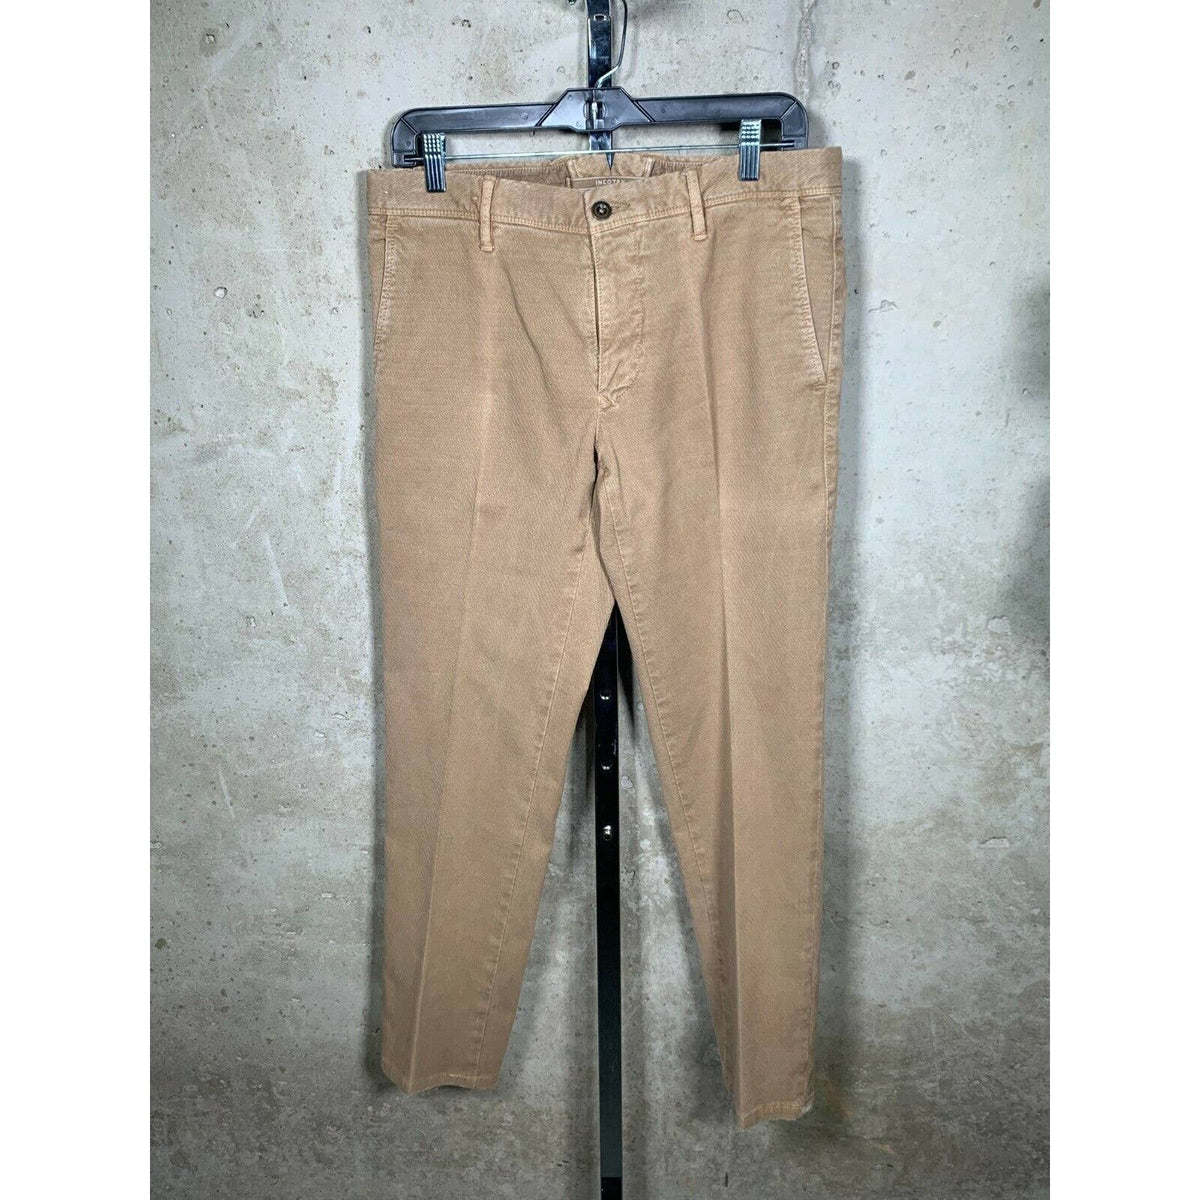 Incotex Men’s Brown Textured Slacks Pants Slim Fit Sz.33